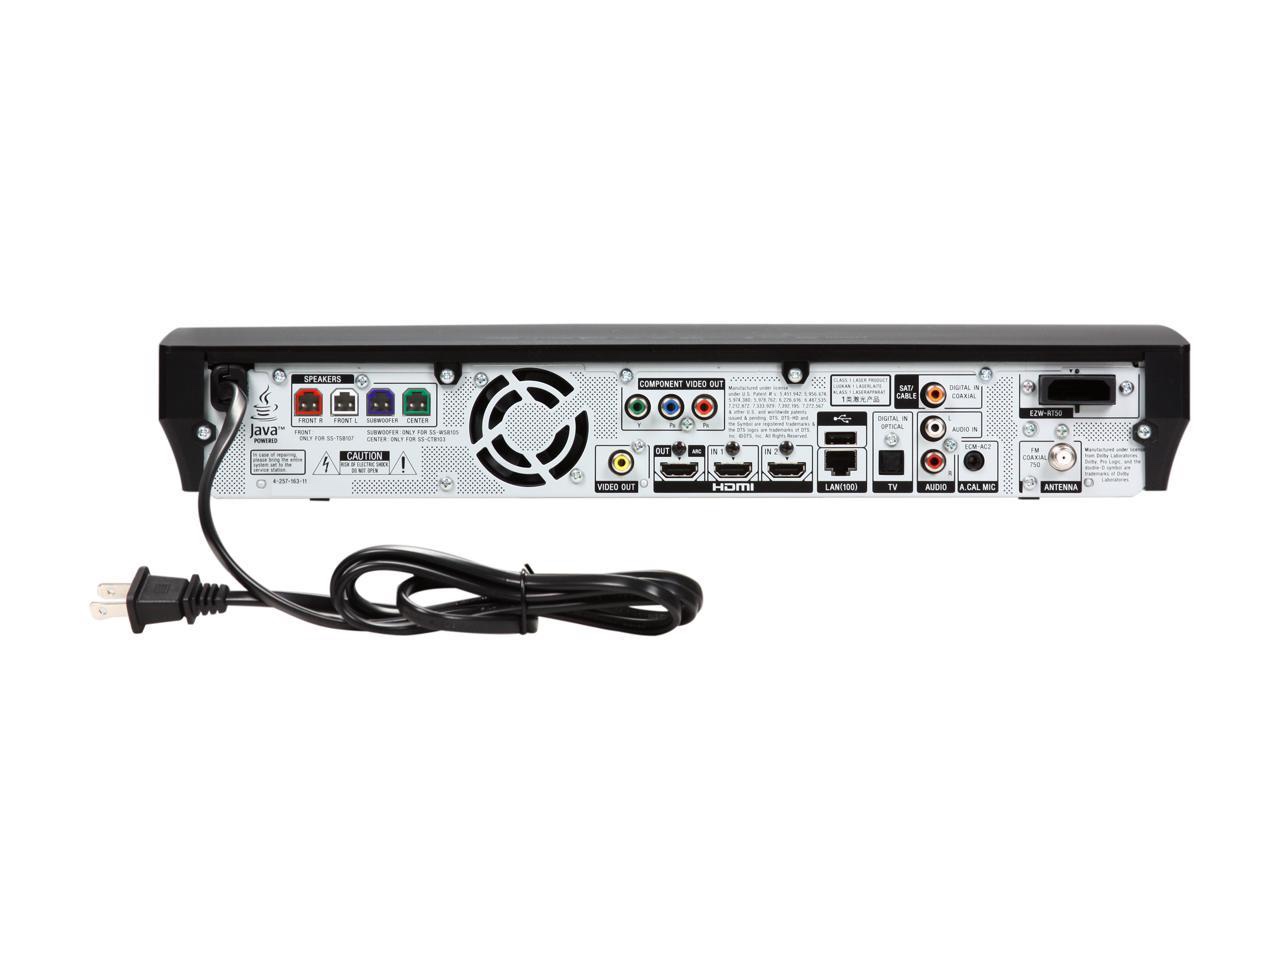 otros electronicos - Home Theater Sony 5.1 equipo sonido + DVD player + AM/FM tuner con bocinas 3